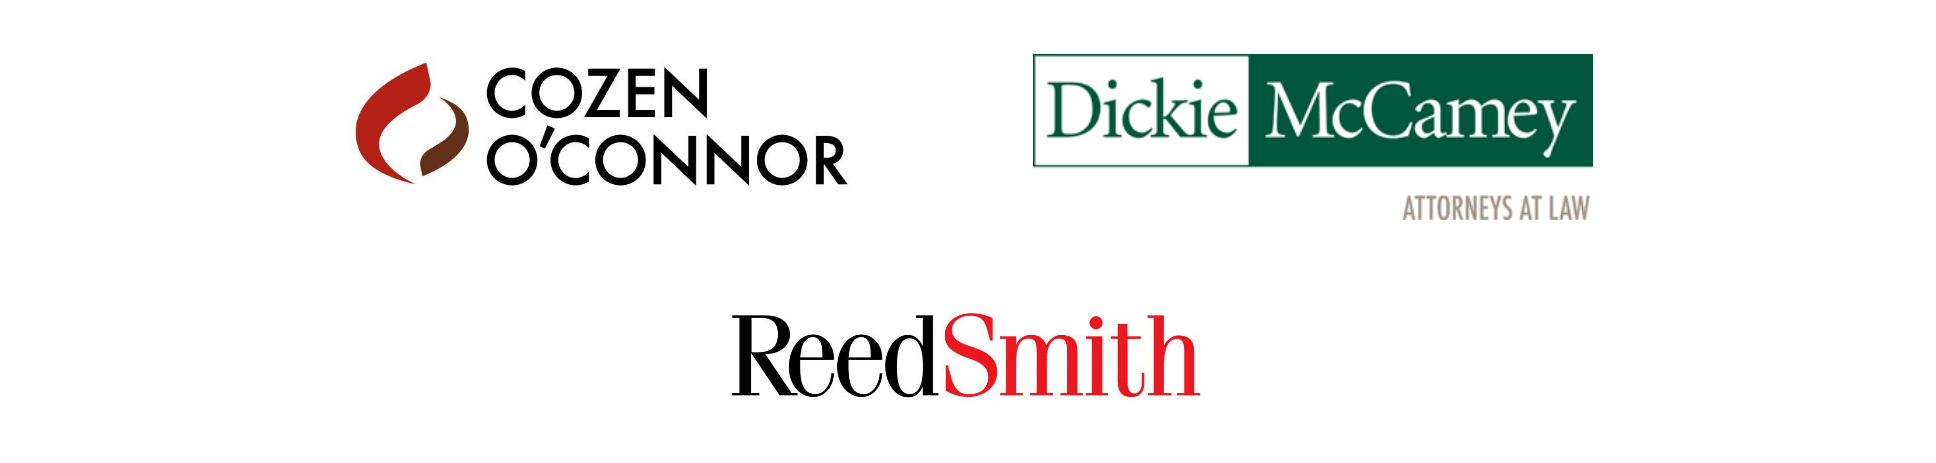 Proponent sponsor logos